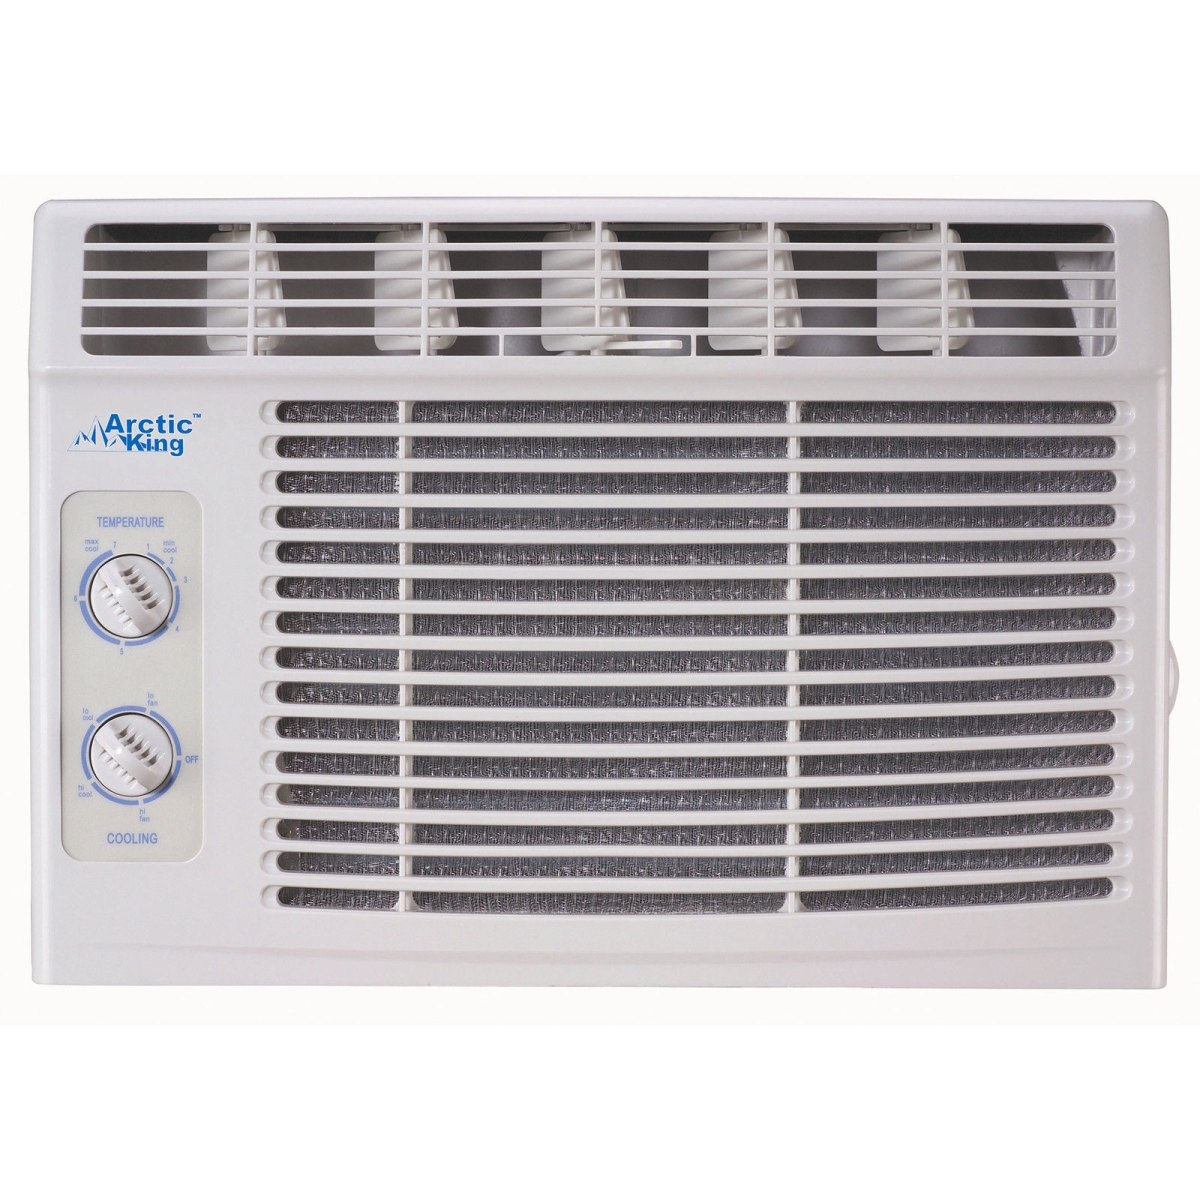 Midea Electric Import AKW05CM71N 5 k Window Air Conditioner